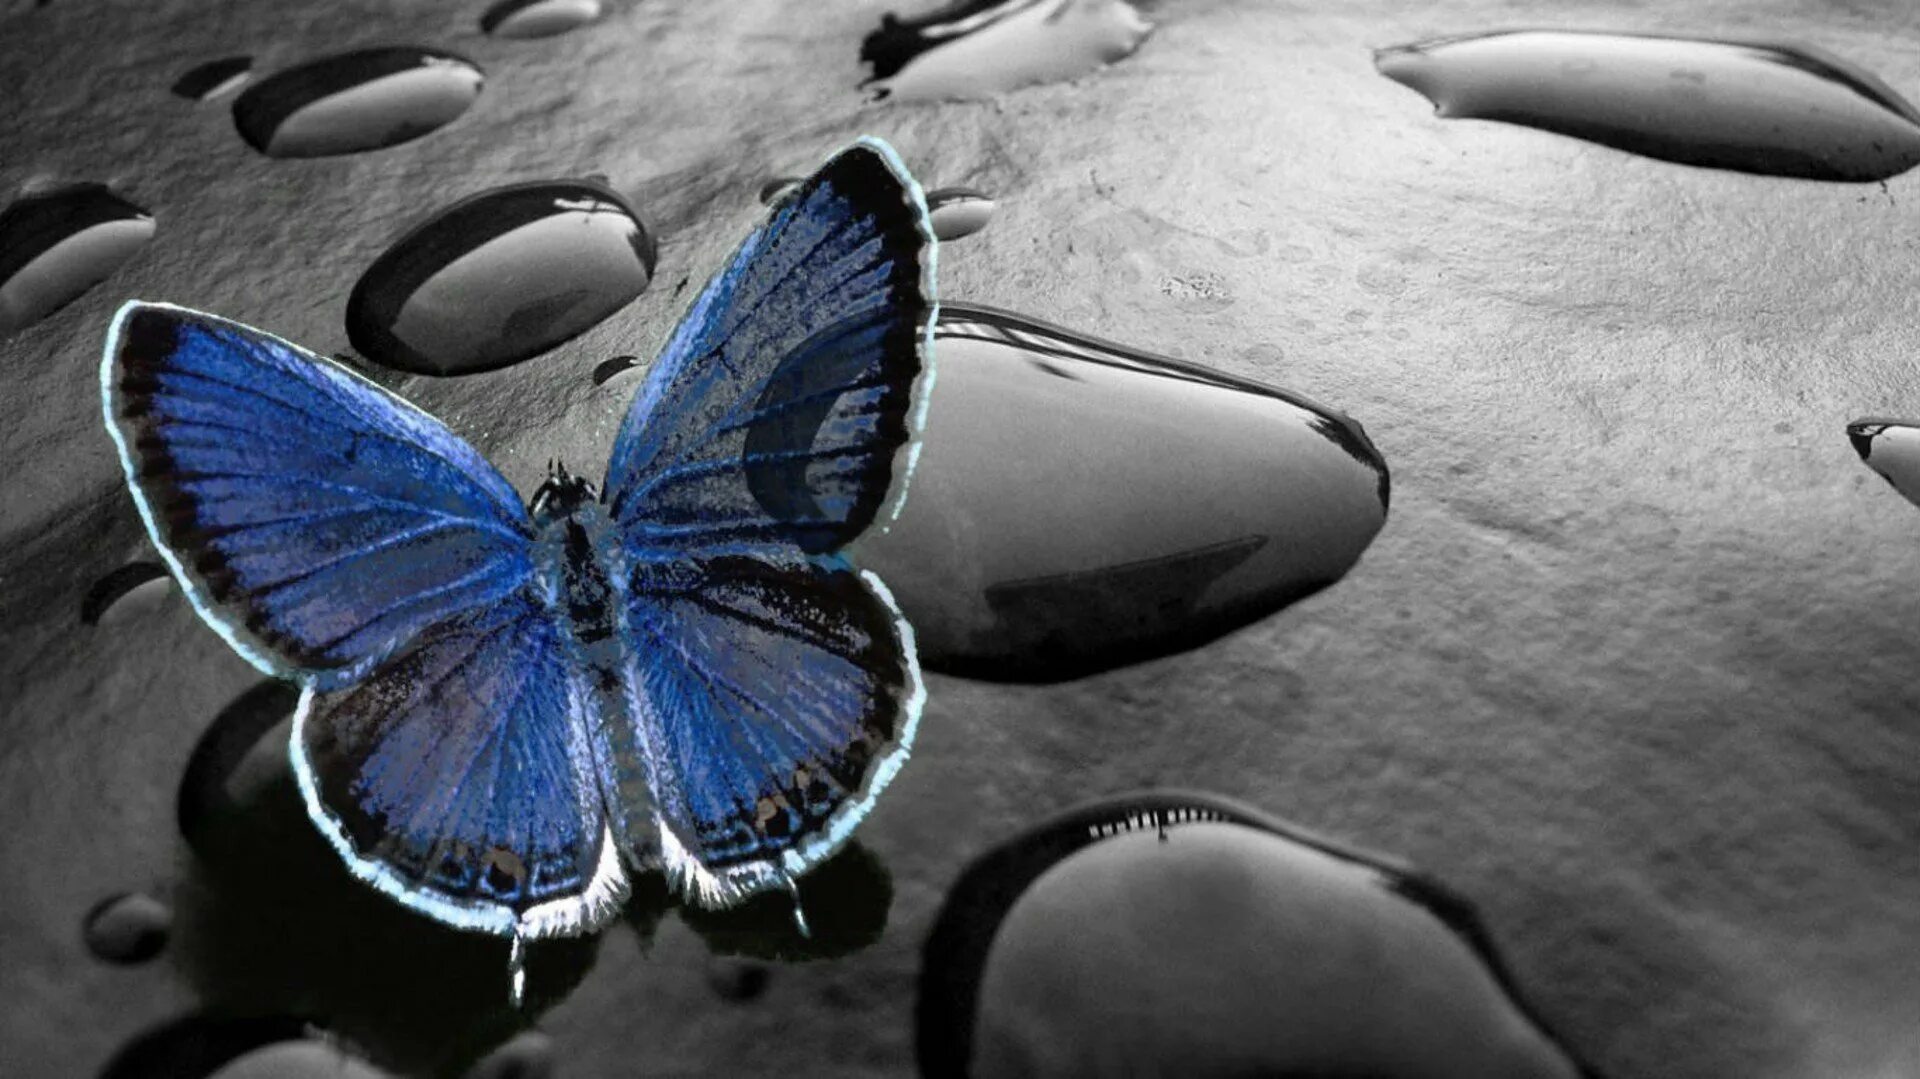 Идет на телефон обои. Картинки на рабочий стол бабочки. Заставка на телефон бабочки. Синяя бабочка. Необычные обои.